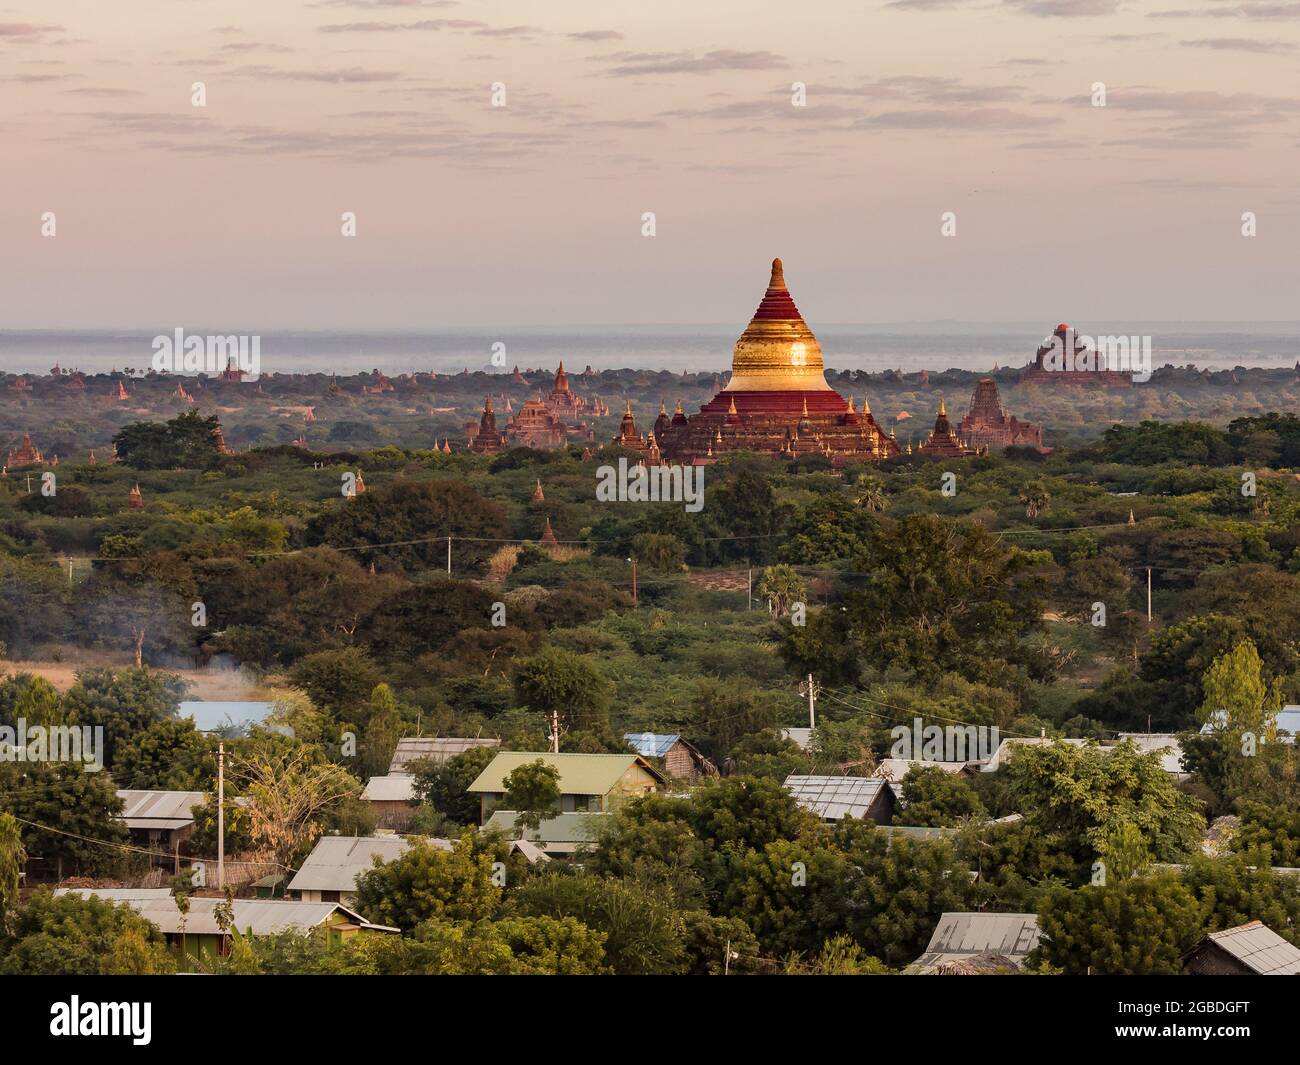 Panorama of the Dhammayazika Pagoda in Bagan as the hot air balloon passes by Stock Photo